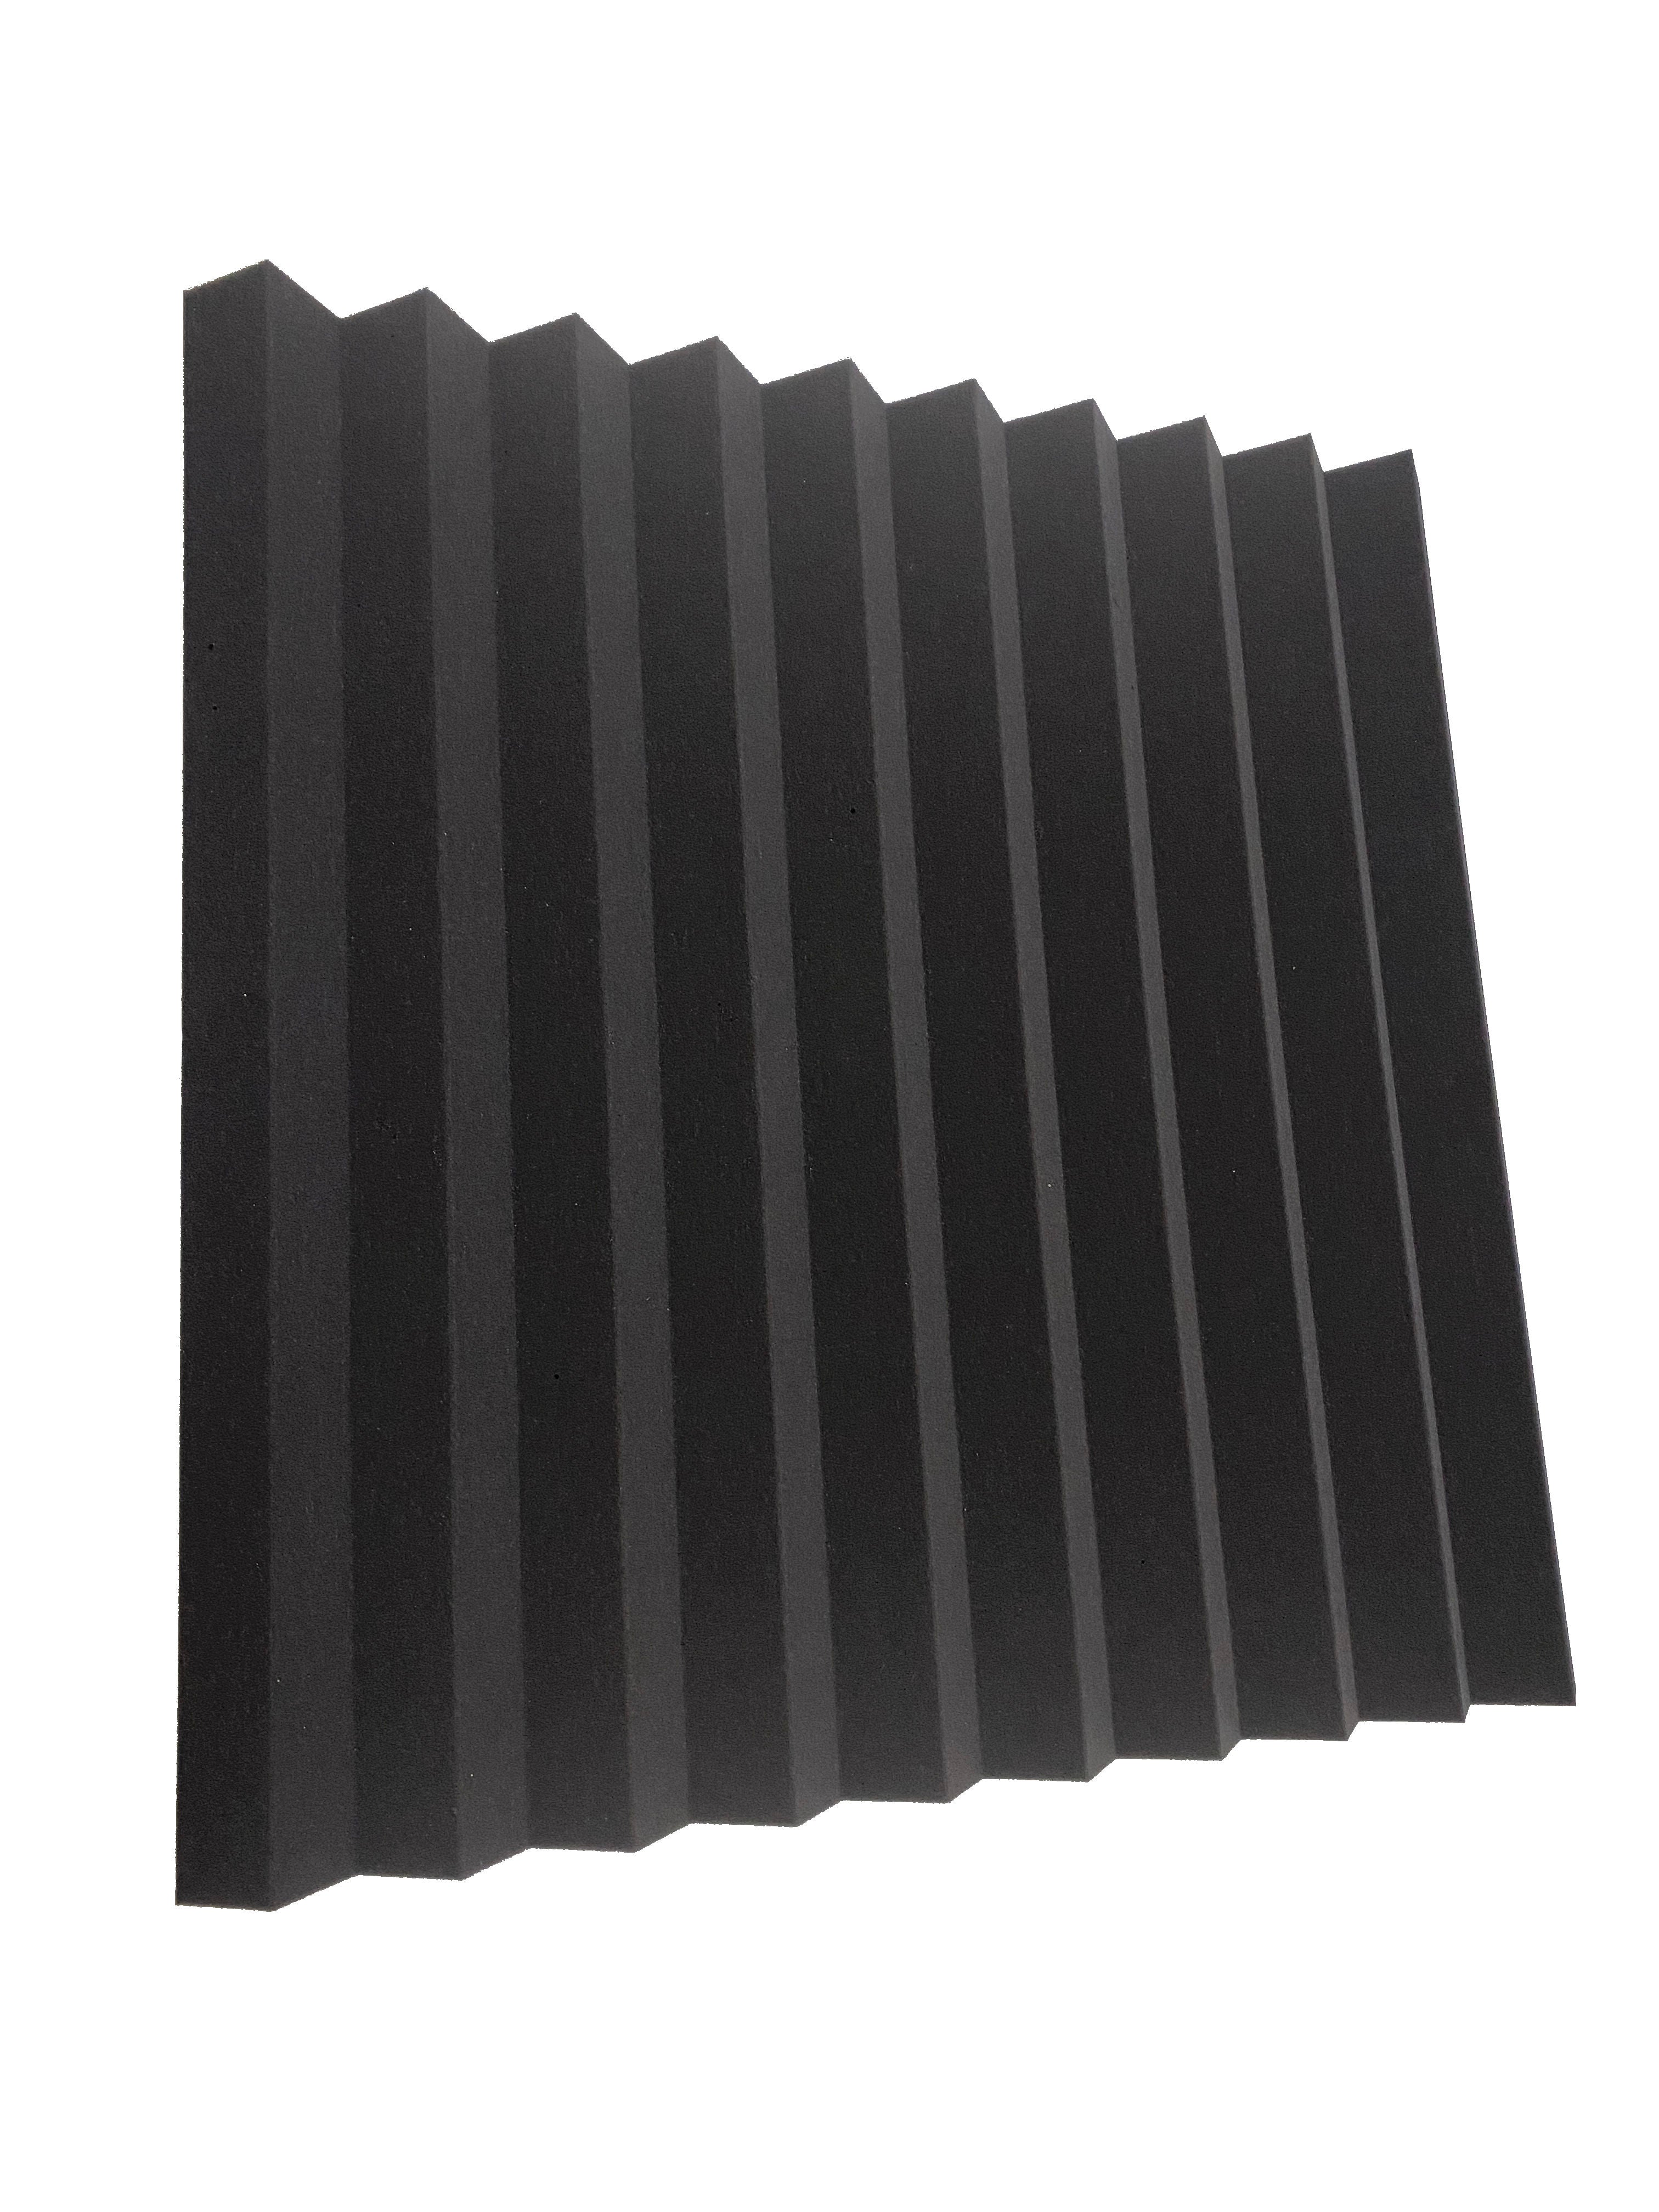 Kaufen dunkelgrau Wedge PRO 76,2 cm Acoustic Studio Foam Tile Kit – 18 Fliesen, 10,44 m² Abdeckung